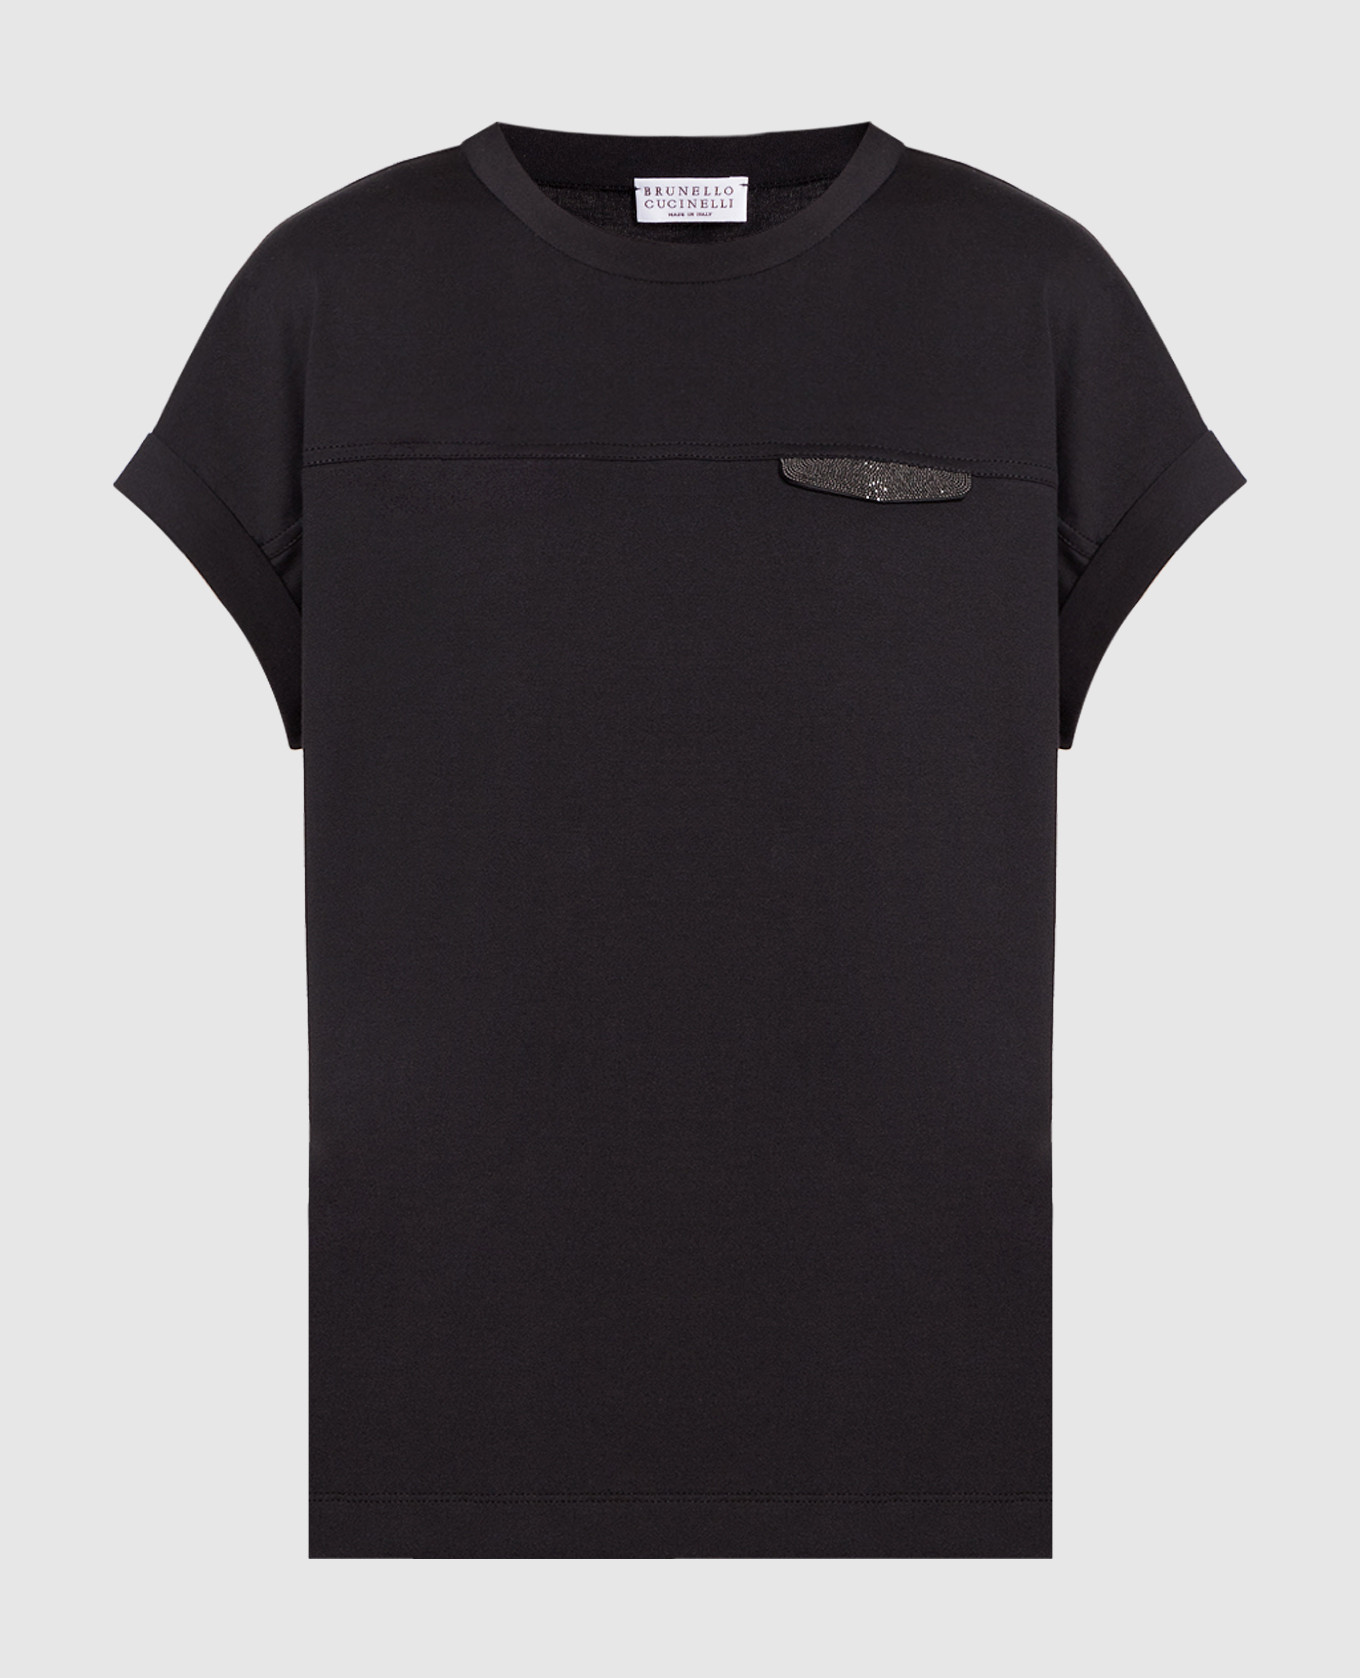 Black t-shirt with monil chain